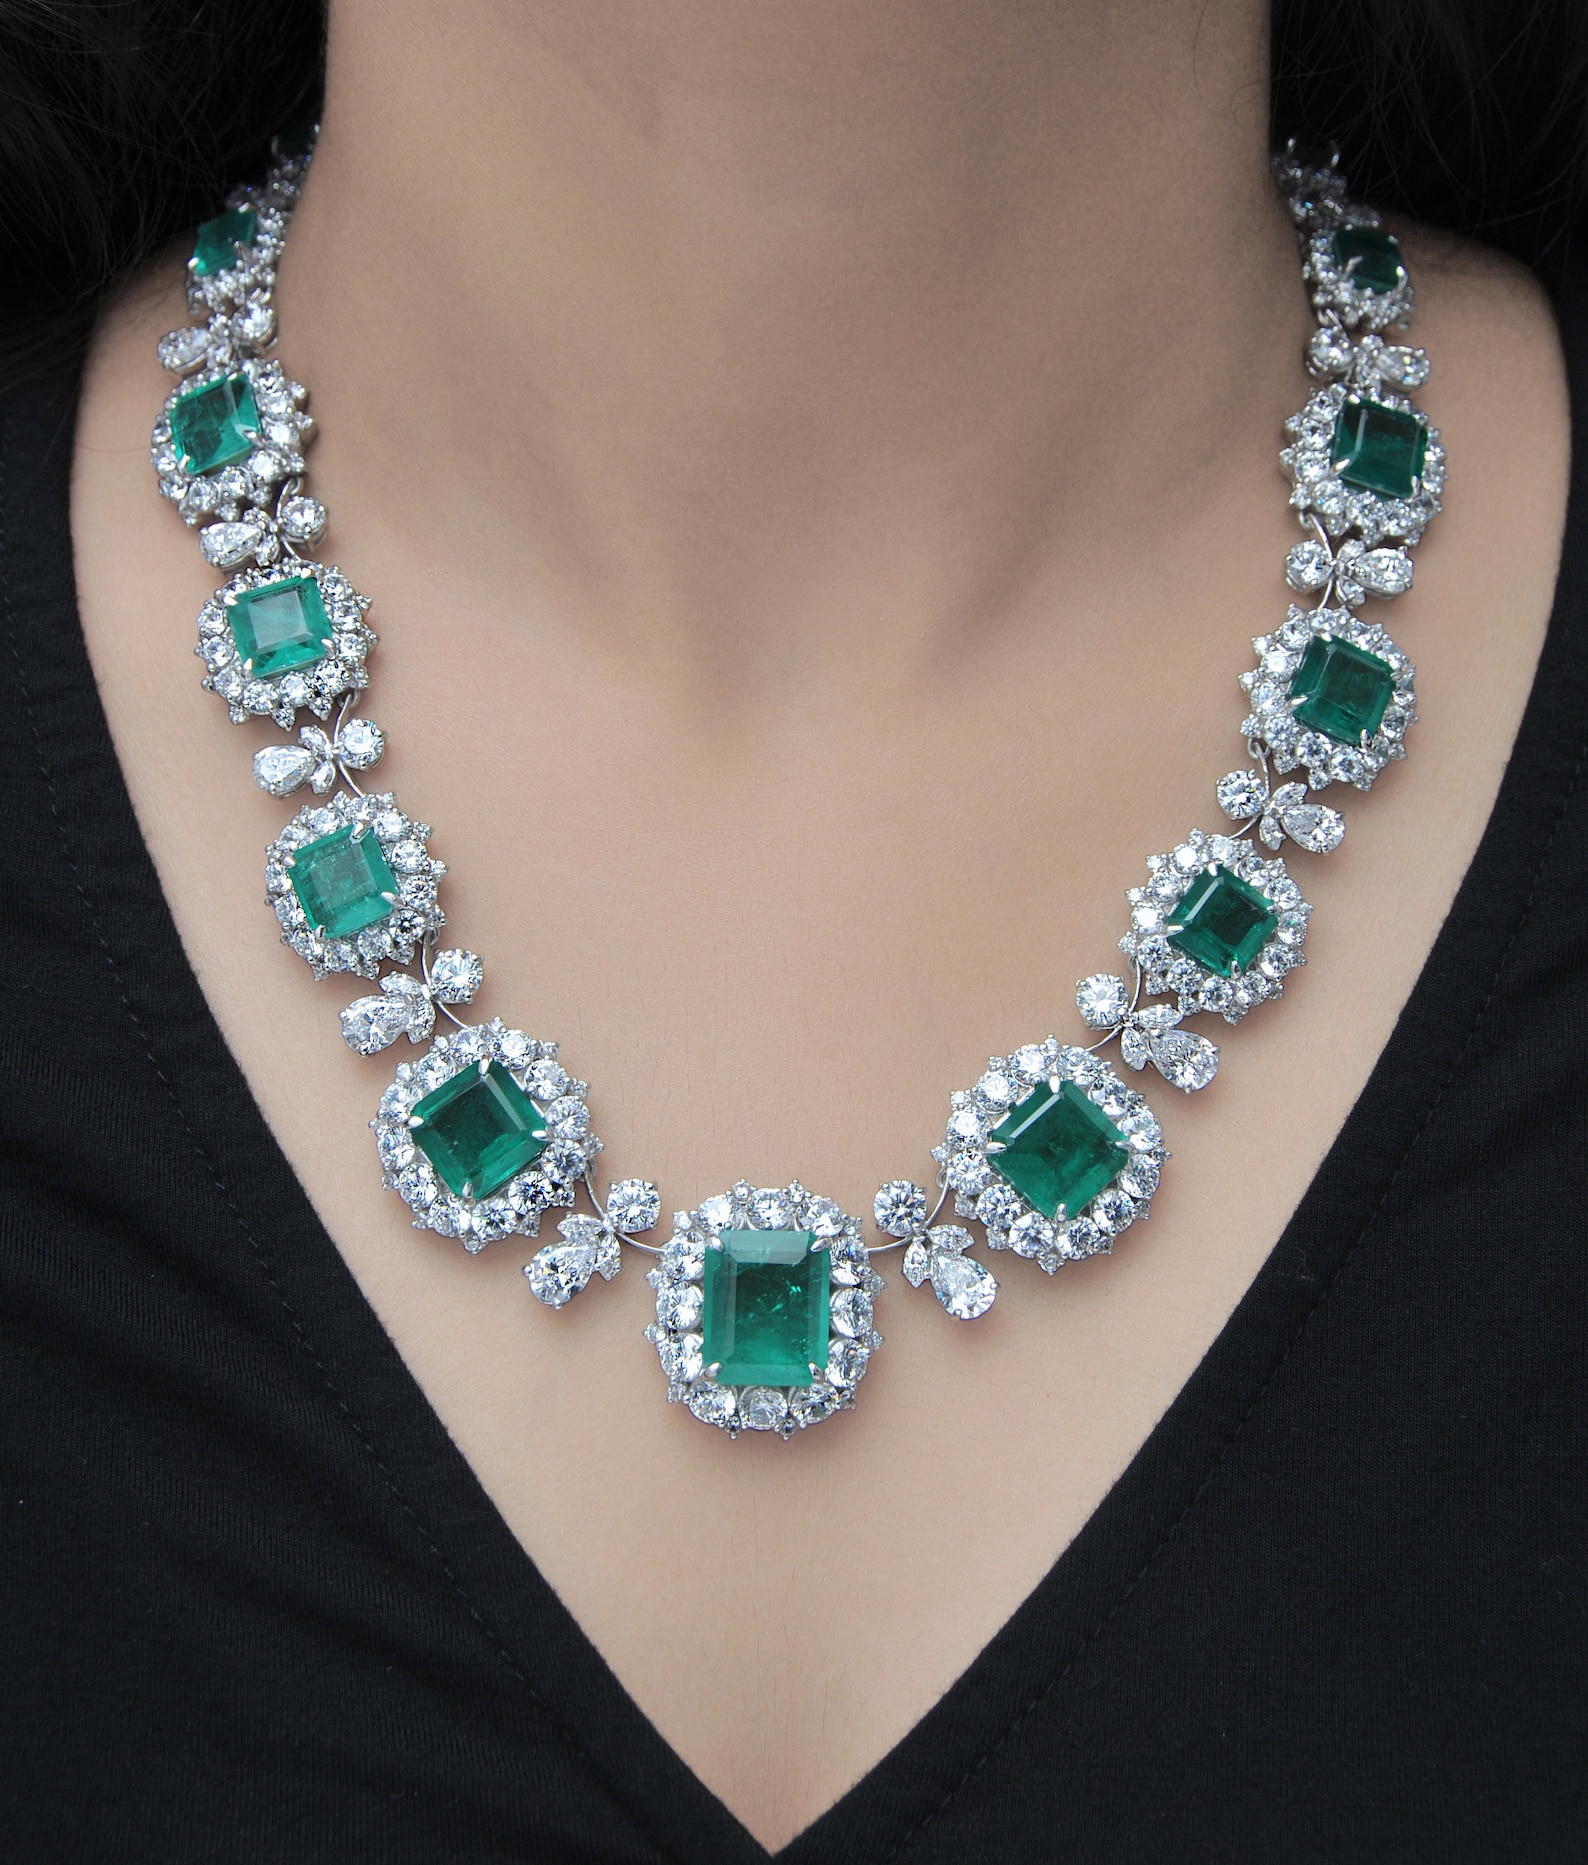 Elizabeth Taylor Inspired Green Emerald Cut Collar Necklace | Etsy